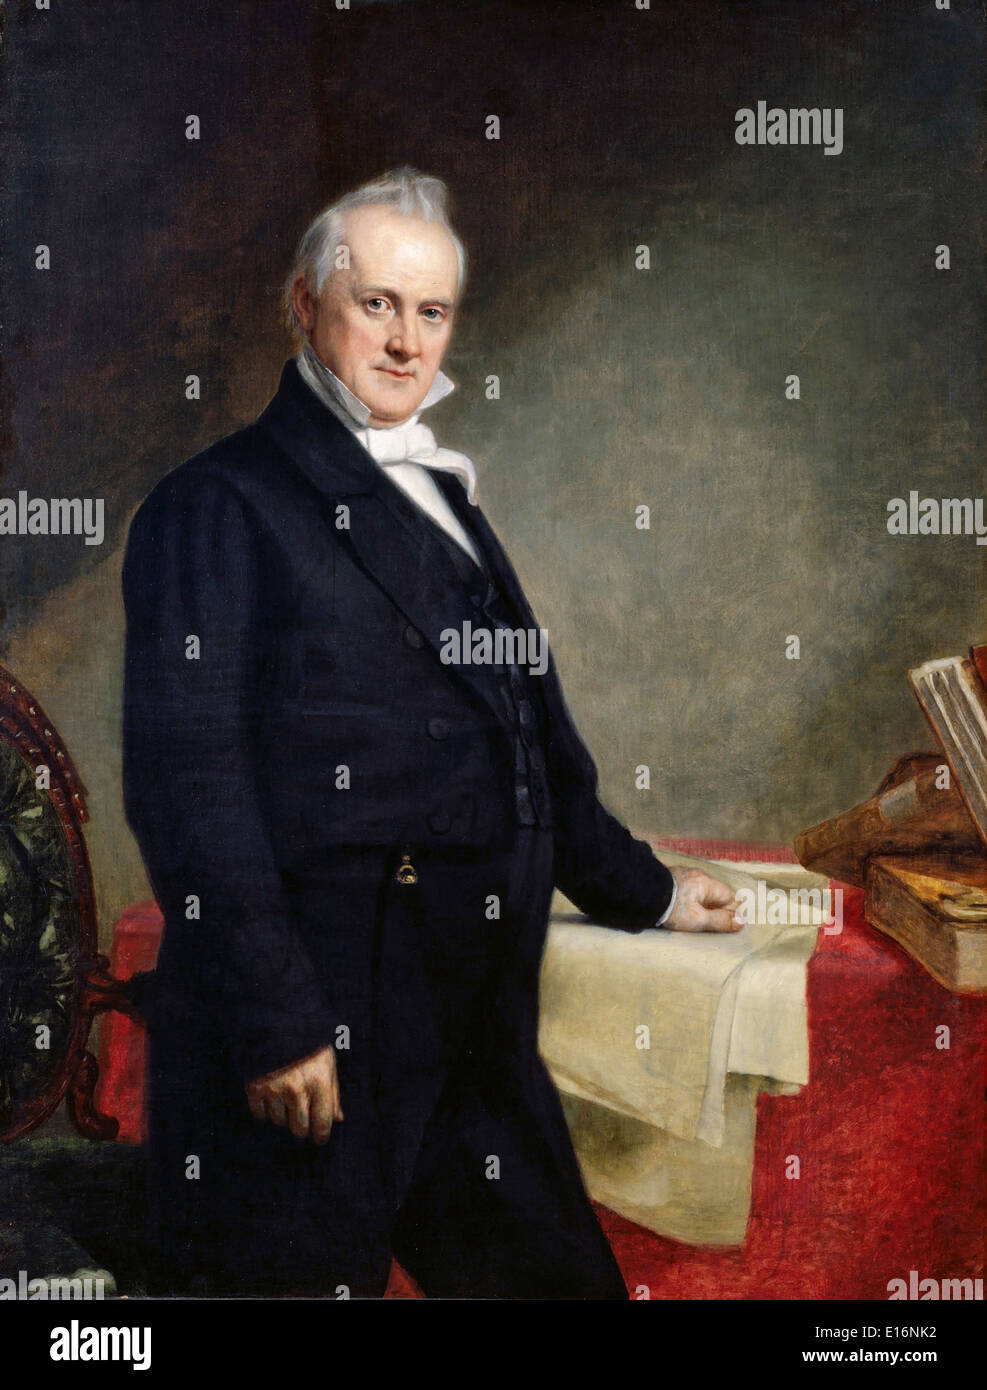 Portrait of James Buchanan by George Peter Alexander Healy,1859 Stock Photo